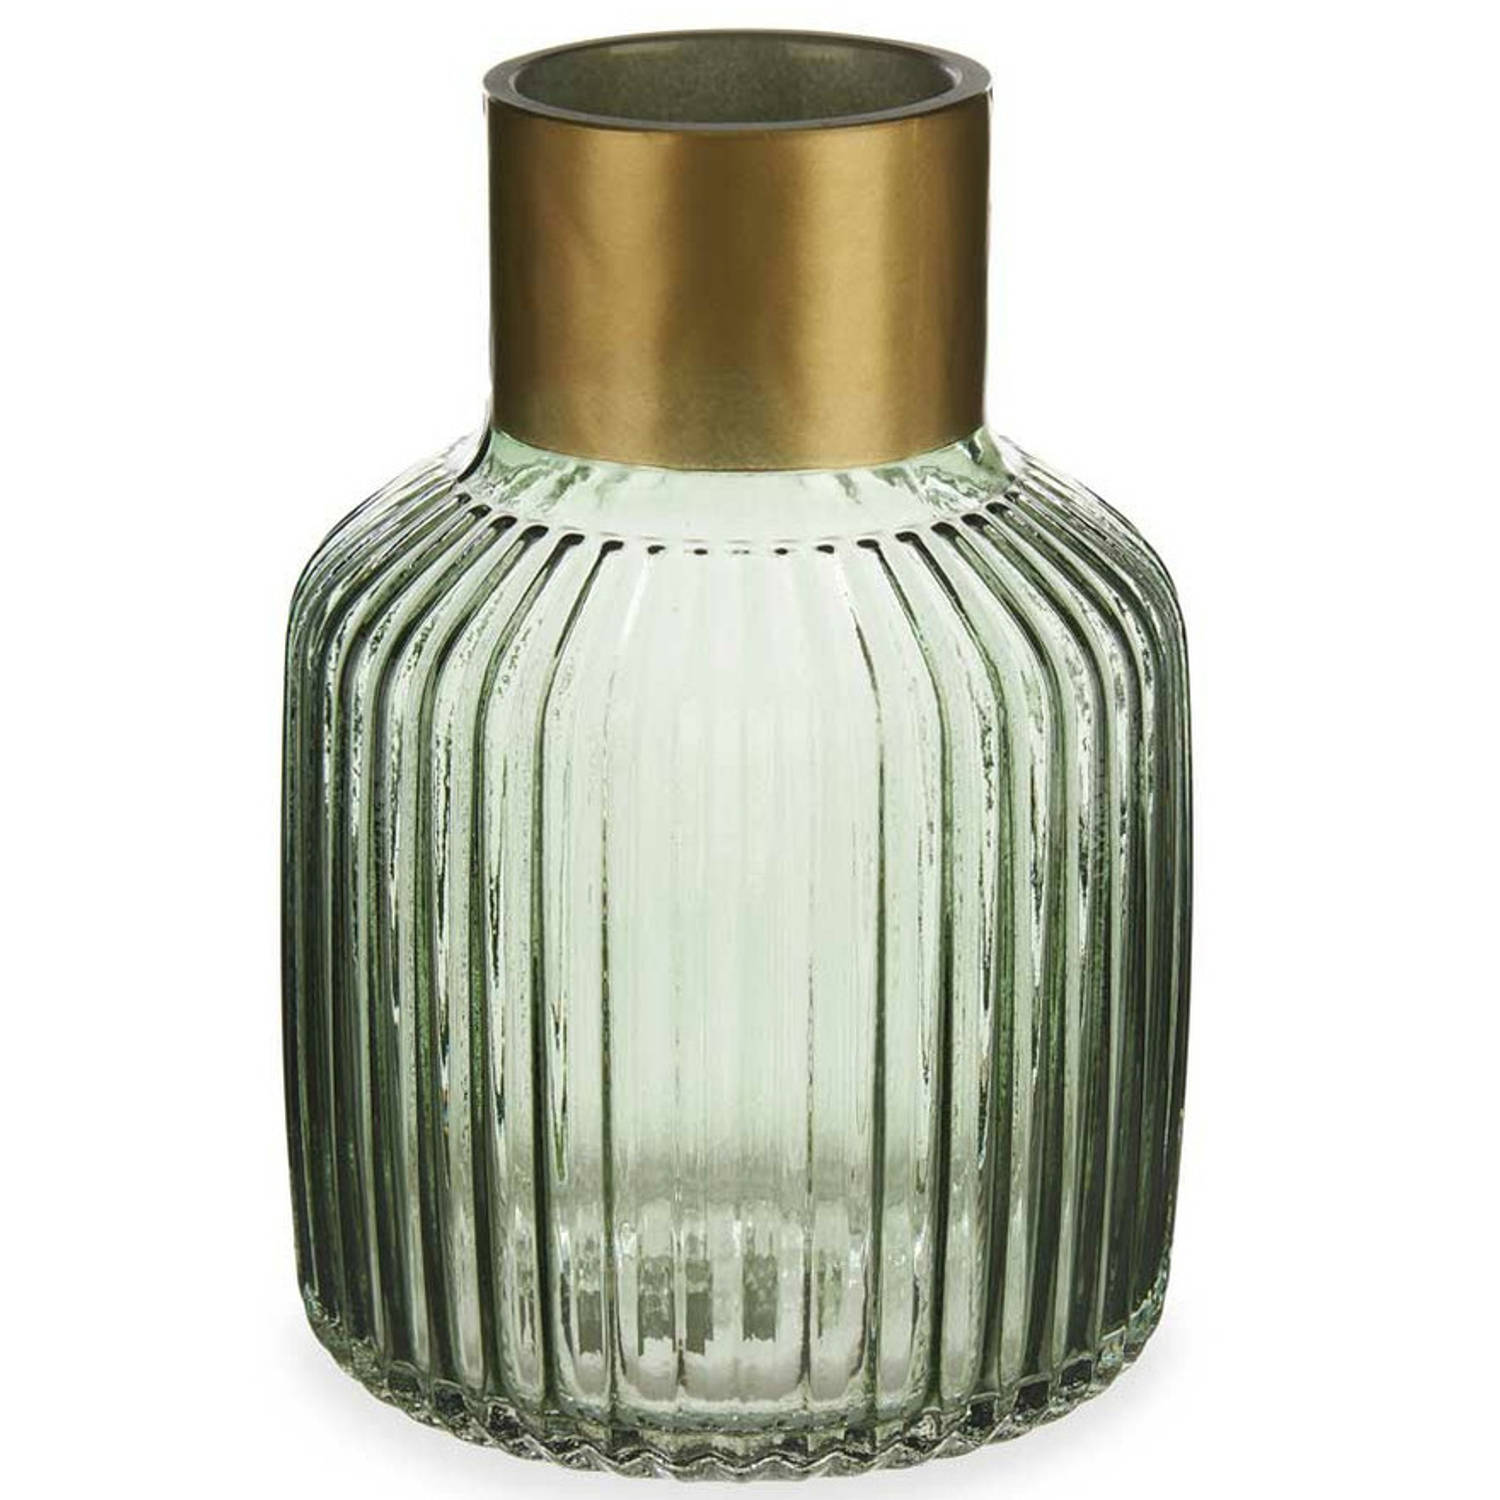 Bloemenvaas luxe decoratie glas groen transparant-goud 14 x 22 cm Vazen